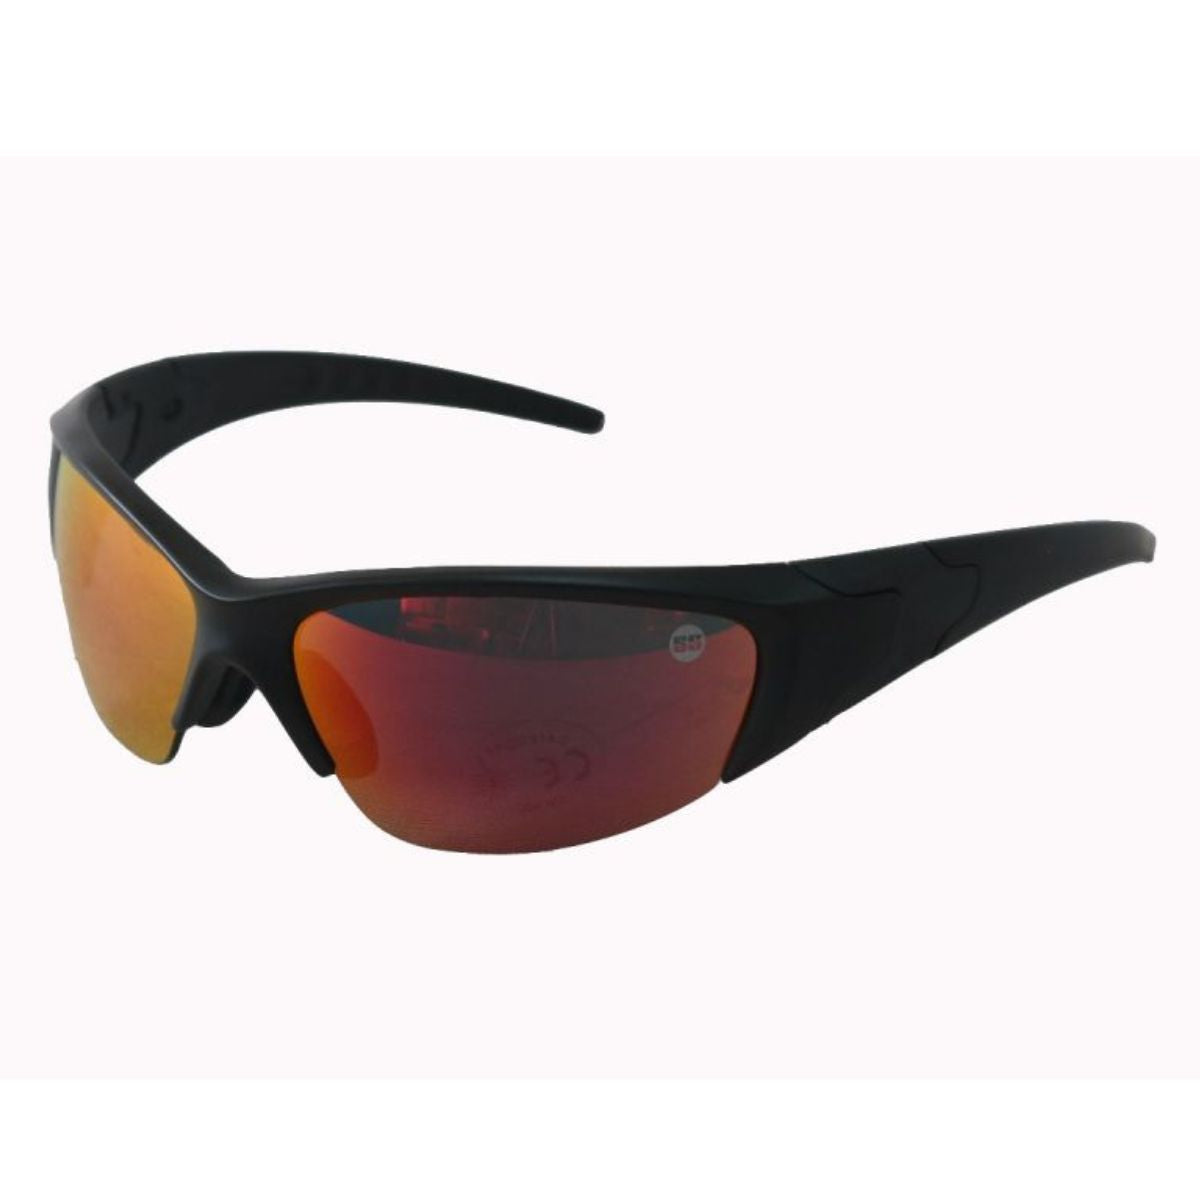 SS Legacy pro 4.0 sports Sunglasses